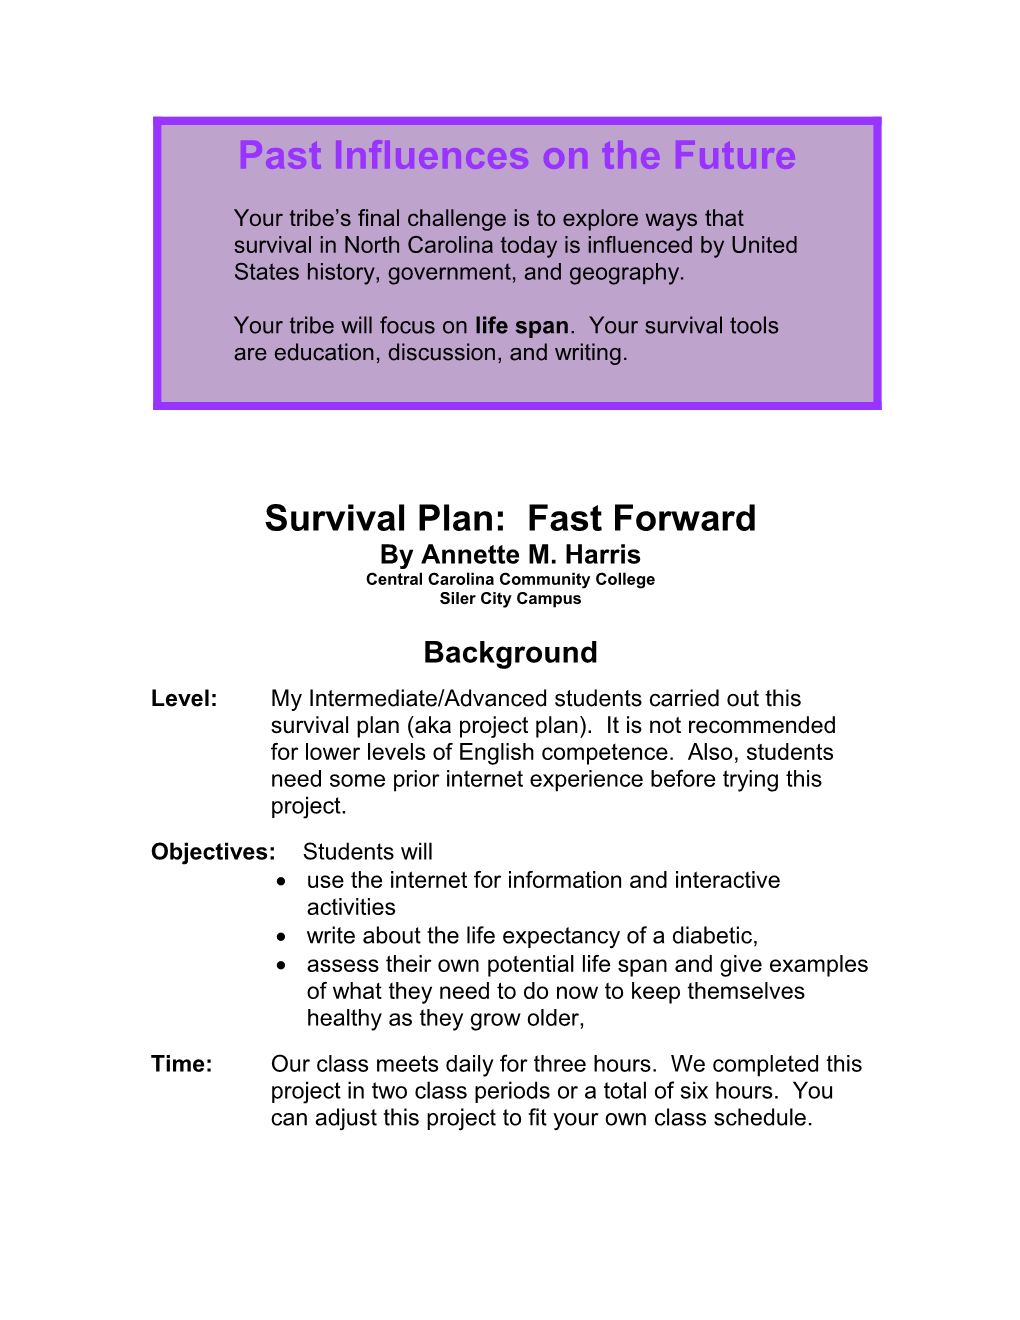 Survival Plan: Fast Forward